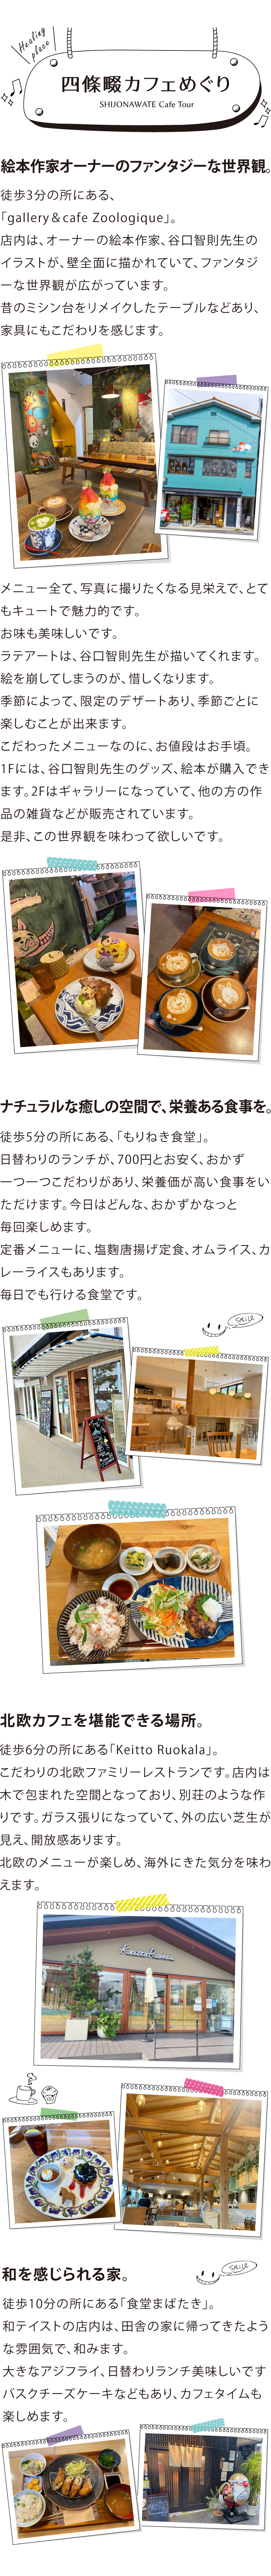 AZ Kai House,シェアハウス,シェアハウス大阪,四條畷カフェ巡り